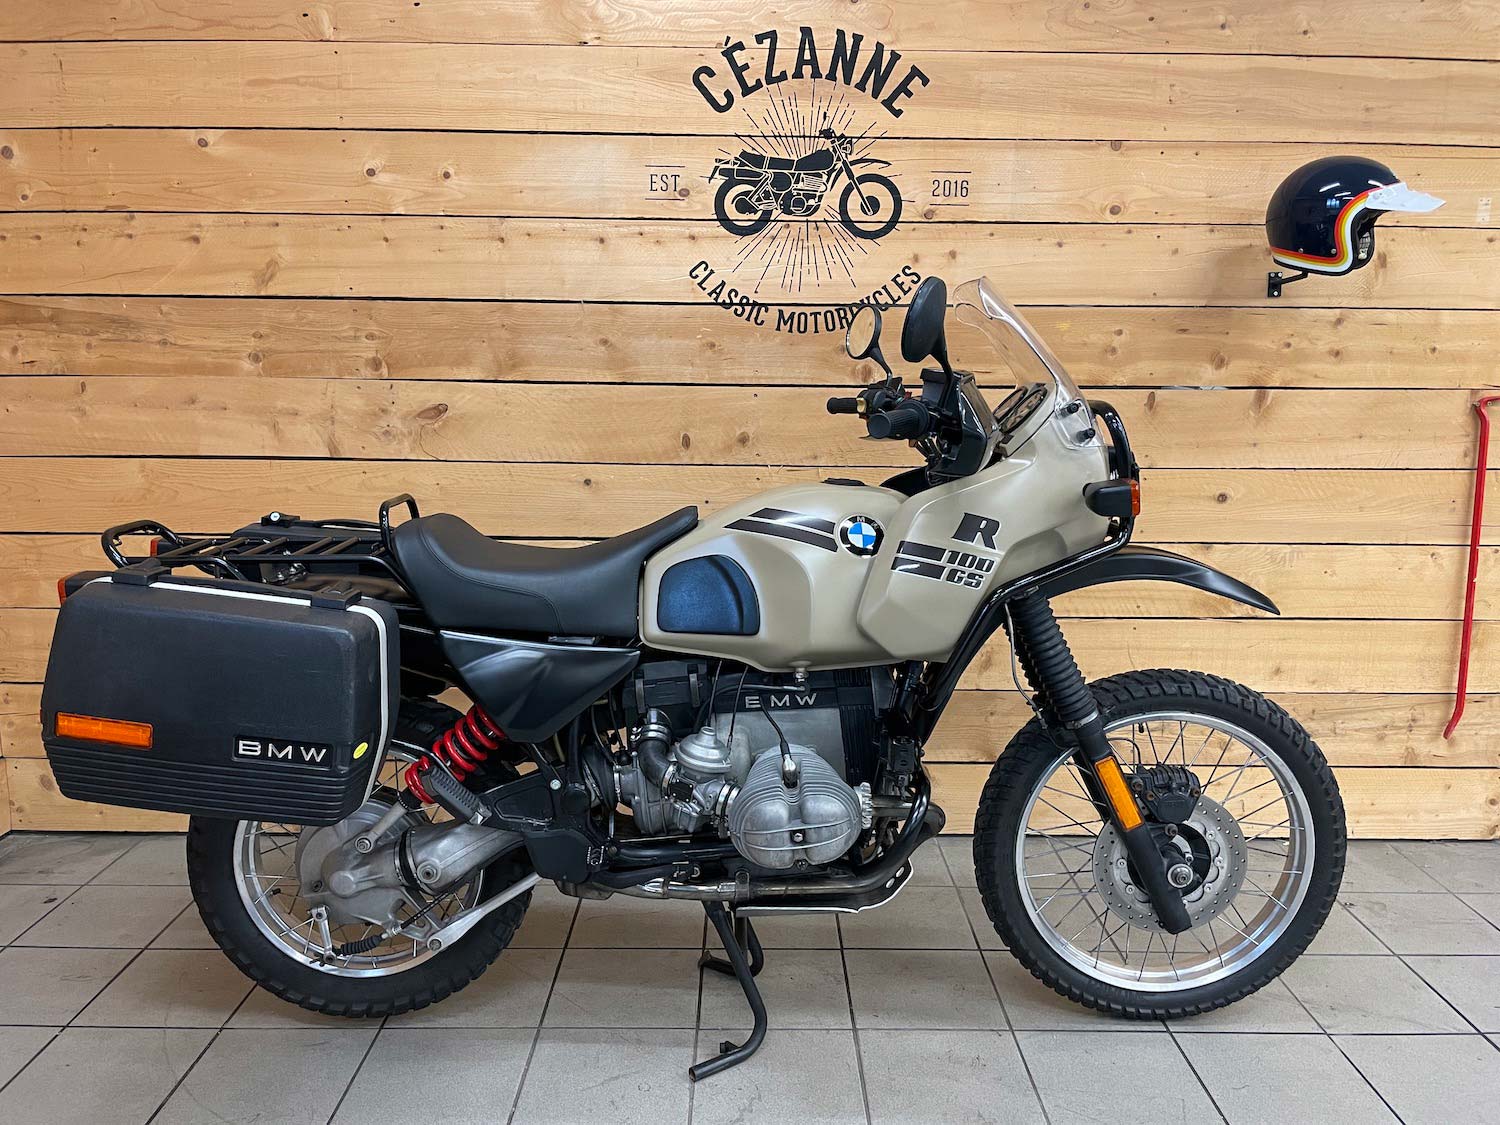 BMW_R100GS_Libian_Sand_cezanne_classicmotorcycles_8-130.jpg